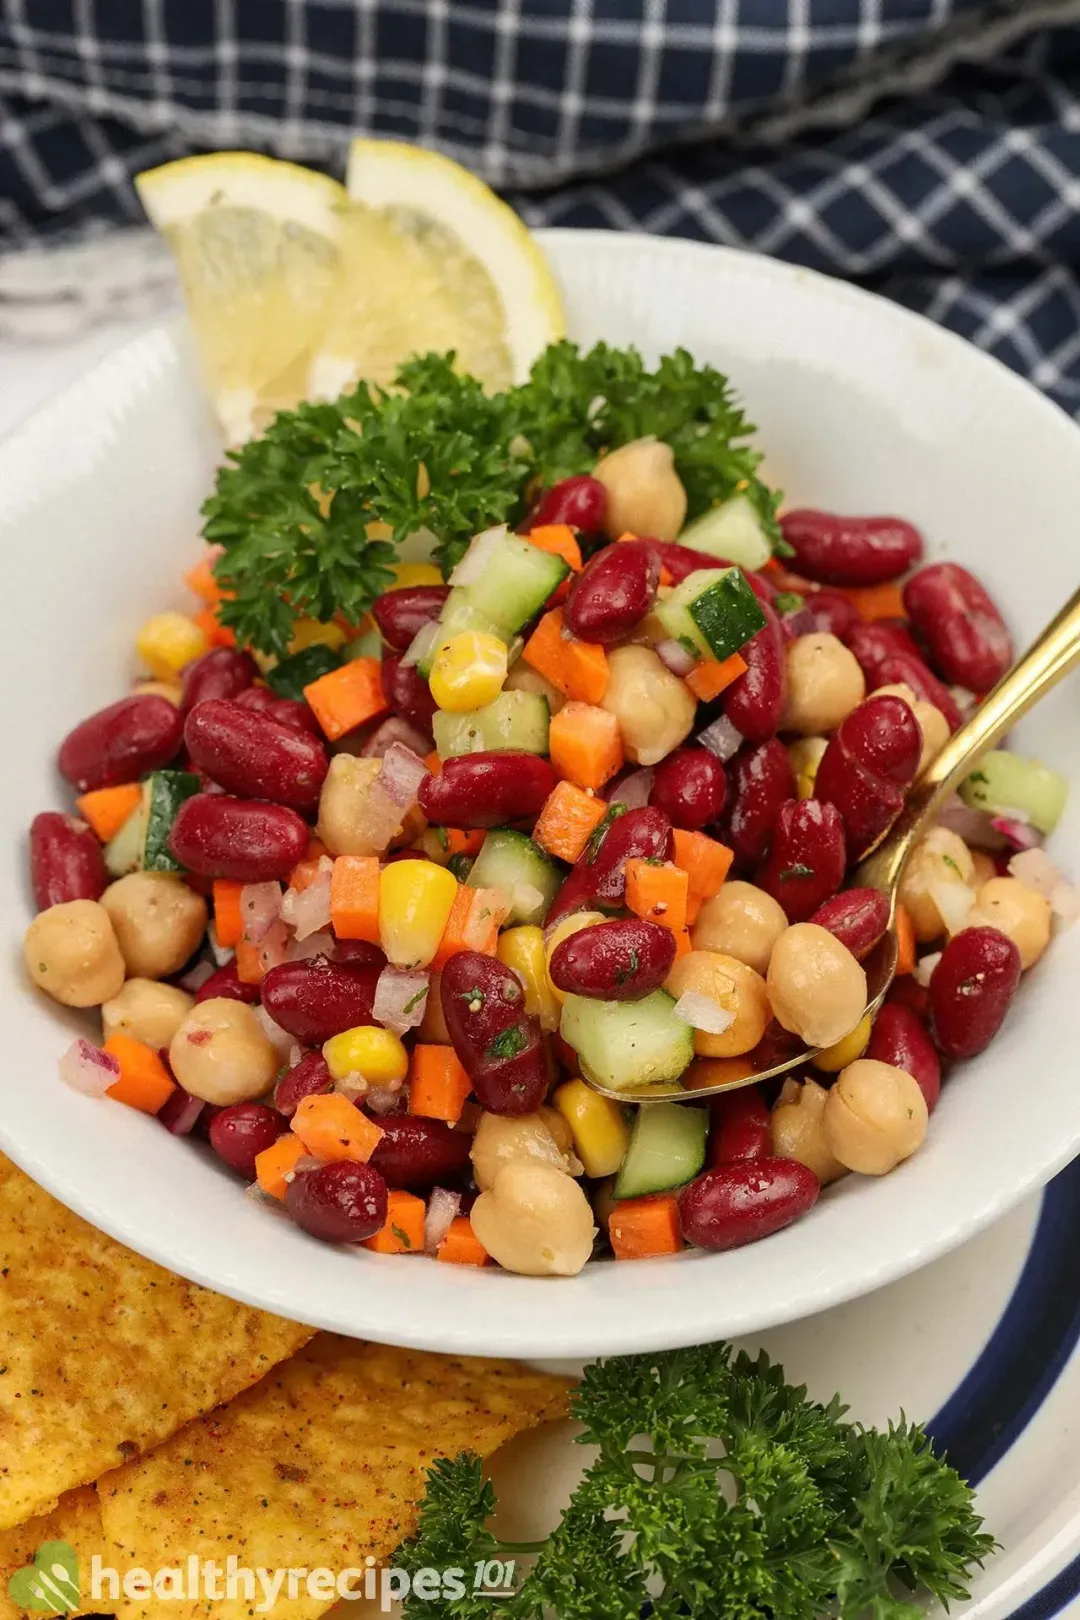 Is Kidney Bean Salad Healthy